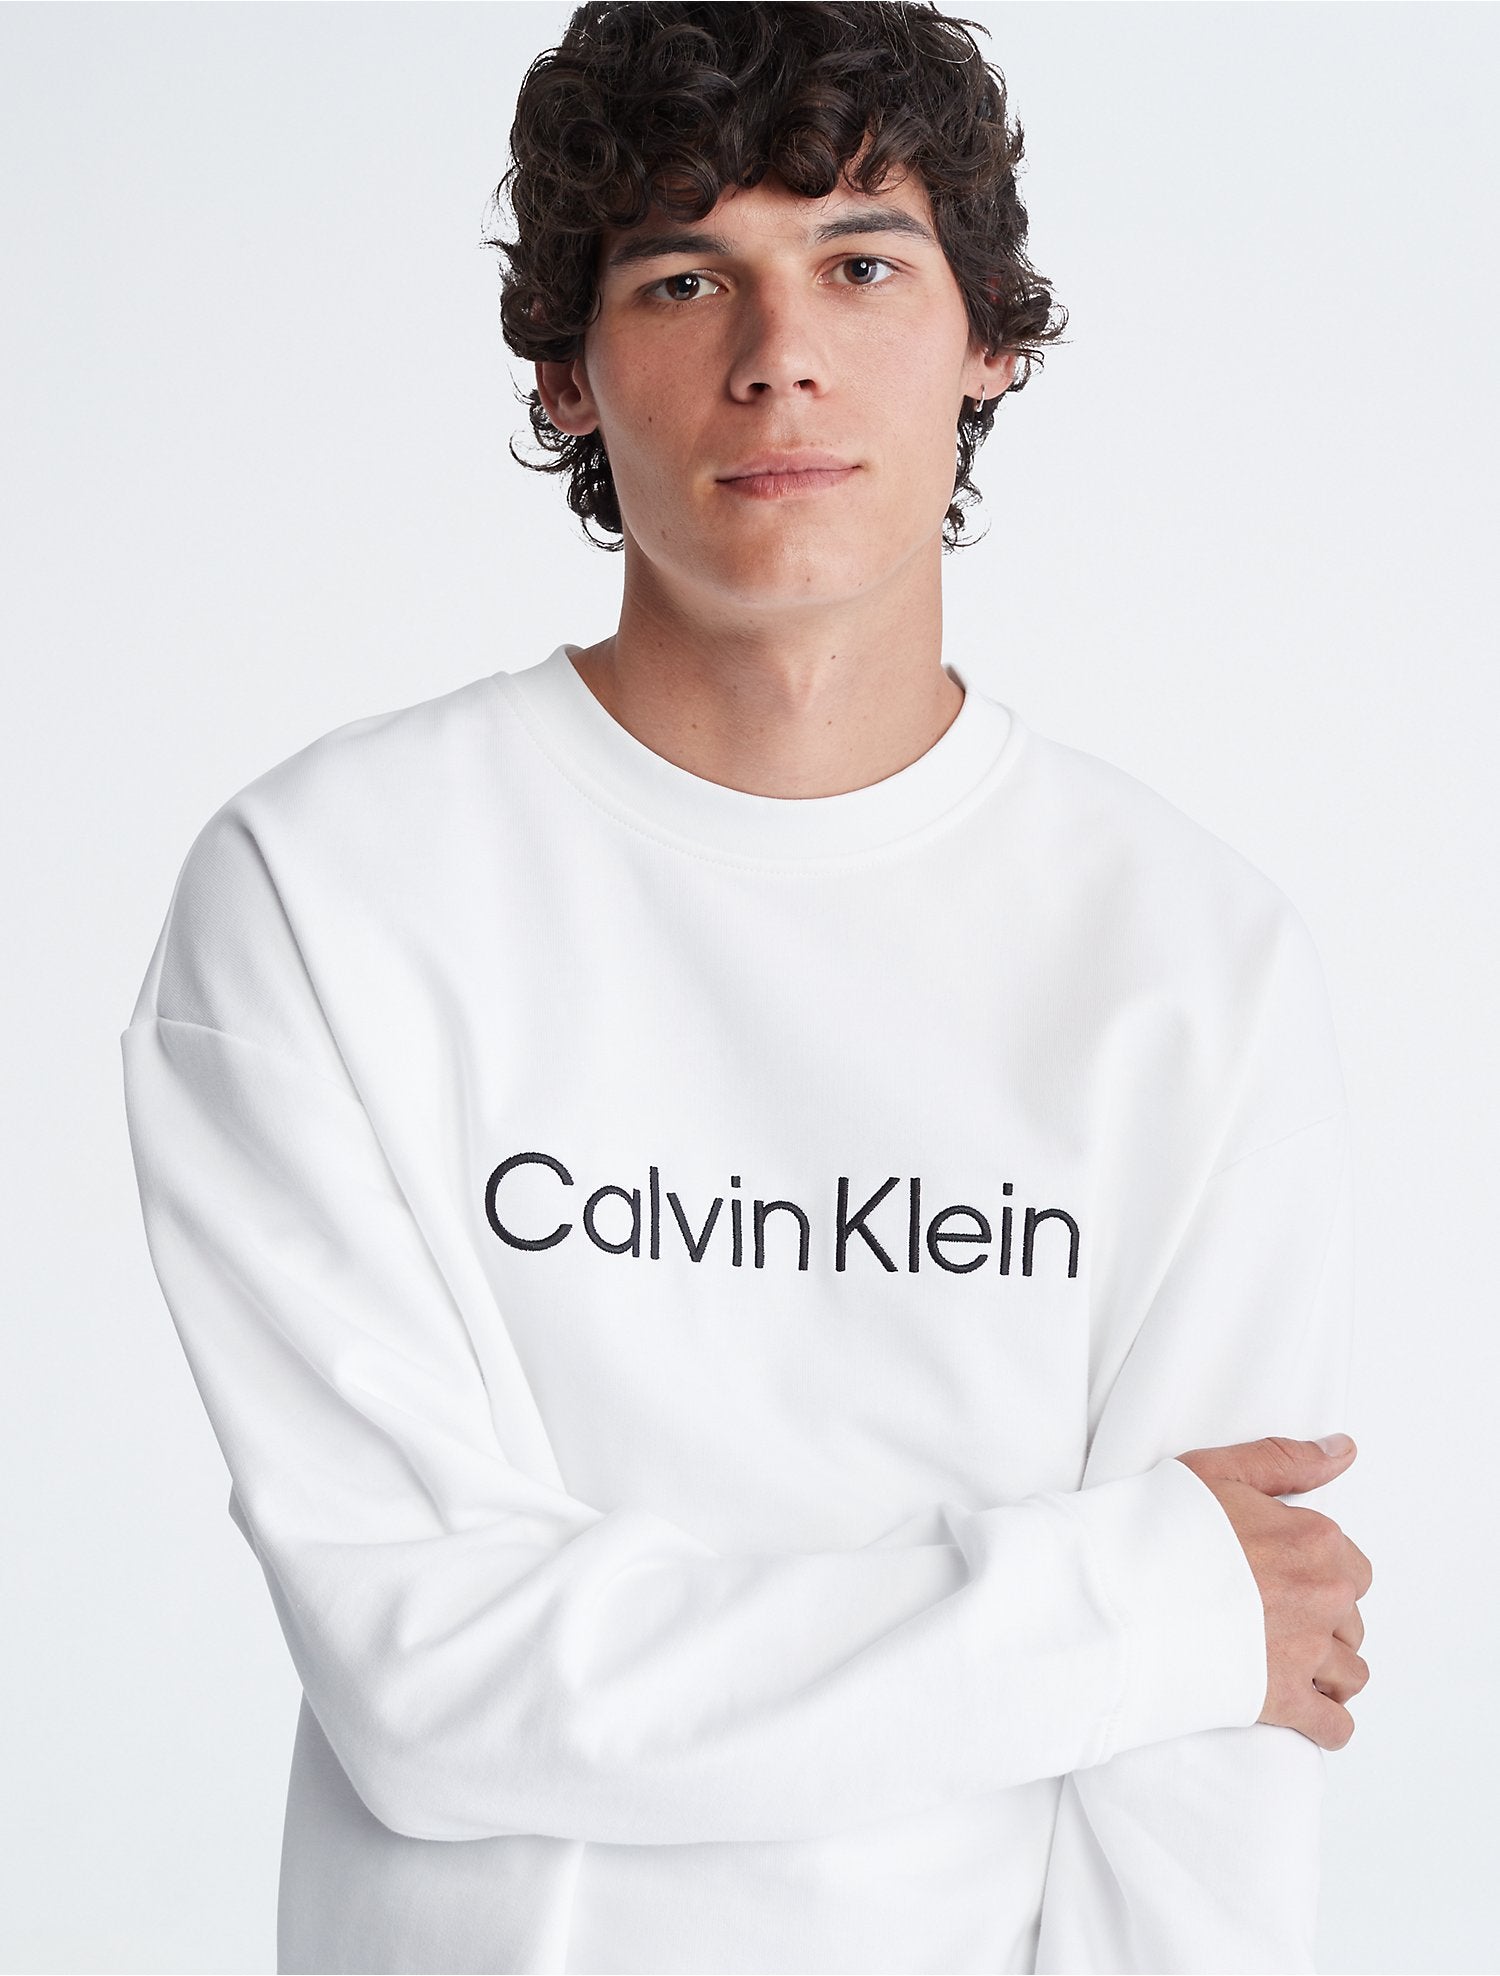 Calvin Klein Relaxed Fit Standard Logo Crewneck Sweatshirt - Men